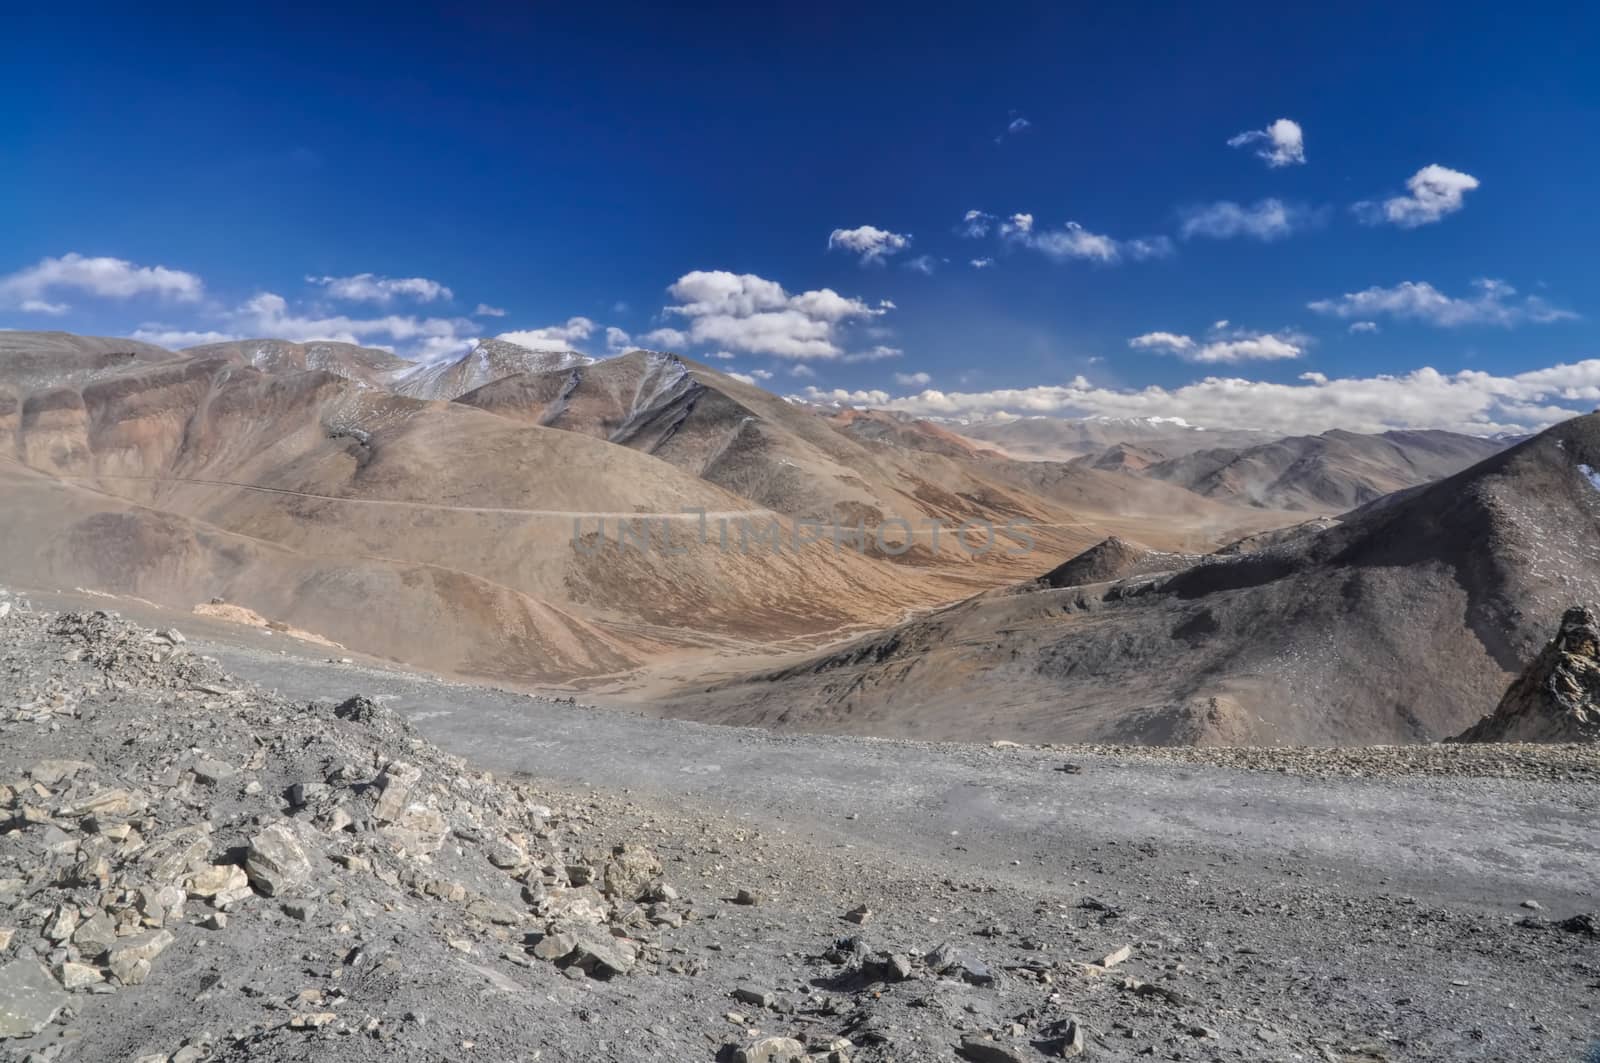 Rocky road leading through the mountains on the way to Ladakh, India